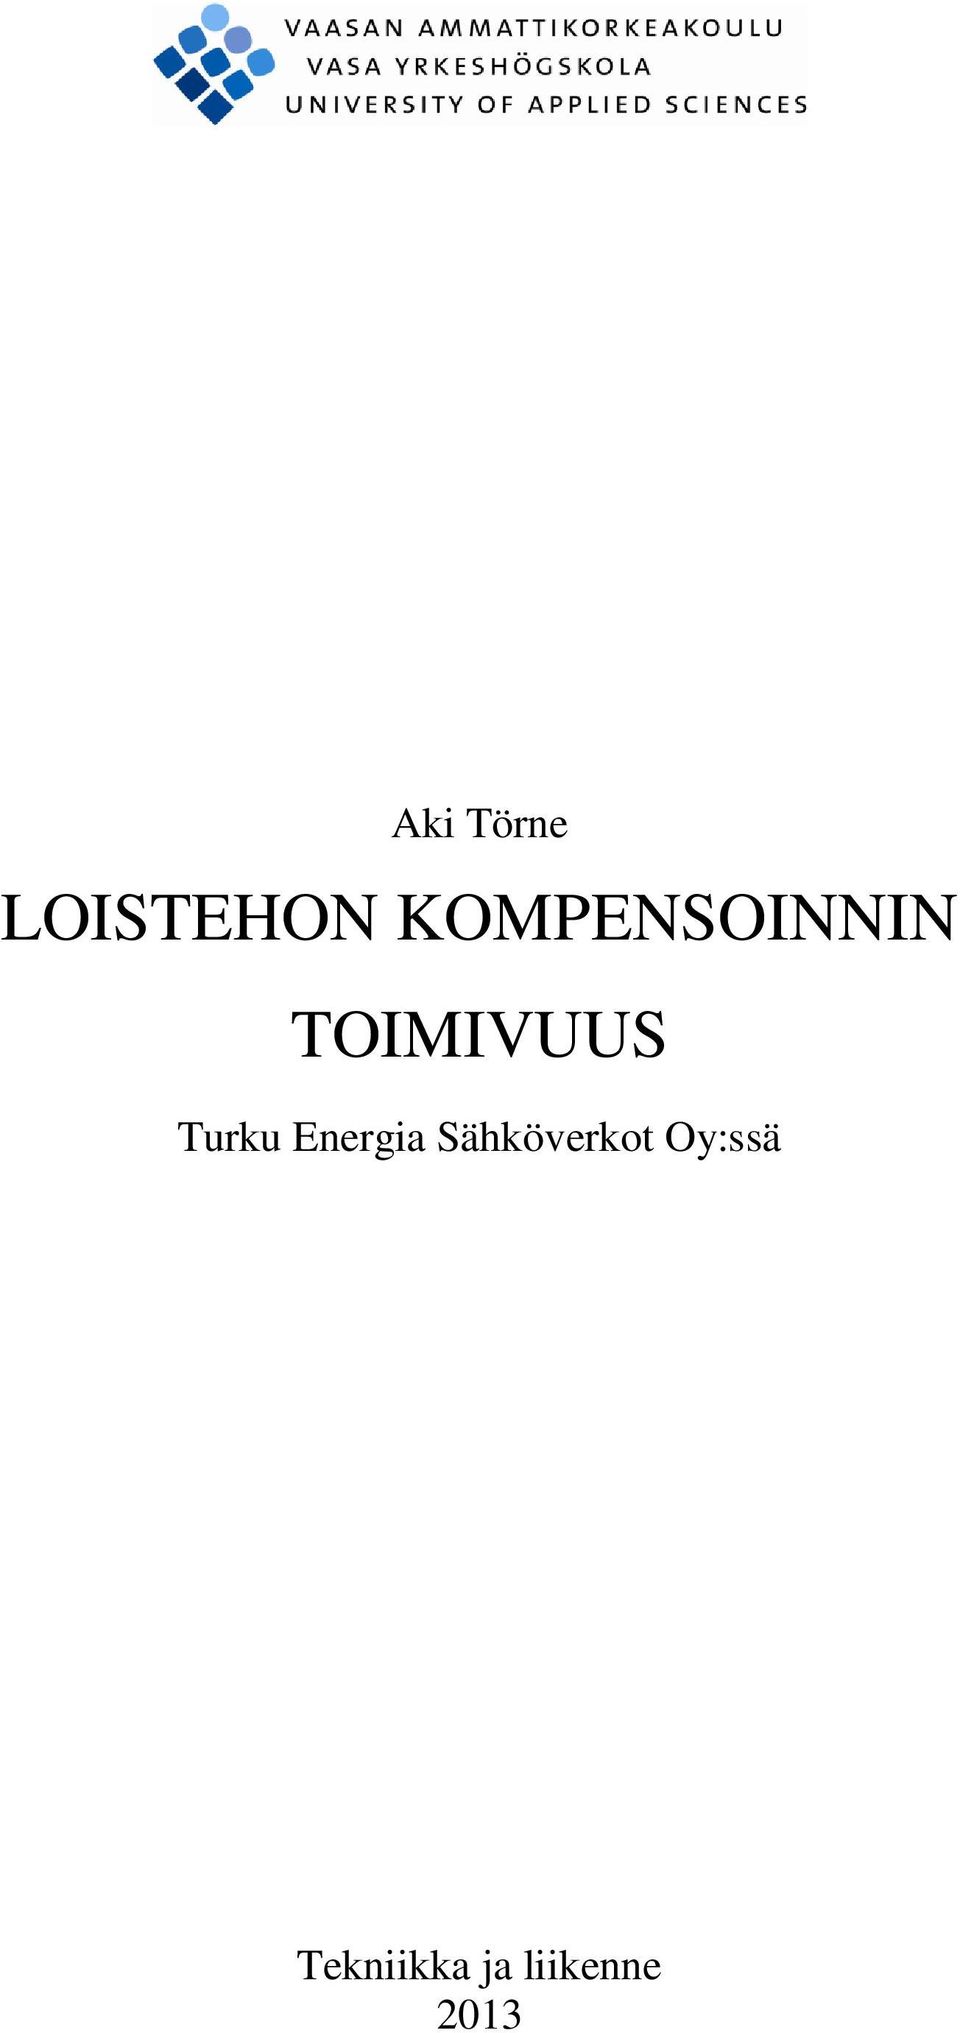 Turku Energia Sähköverkot